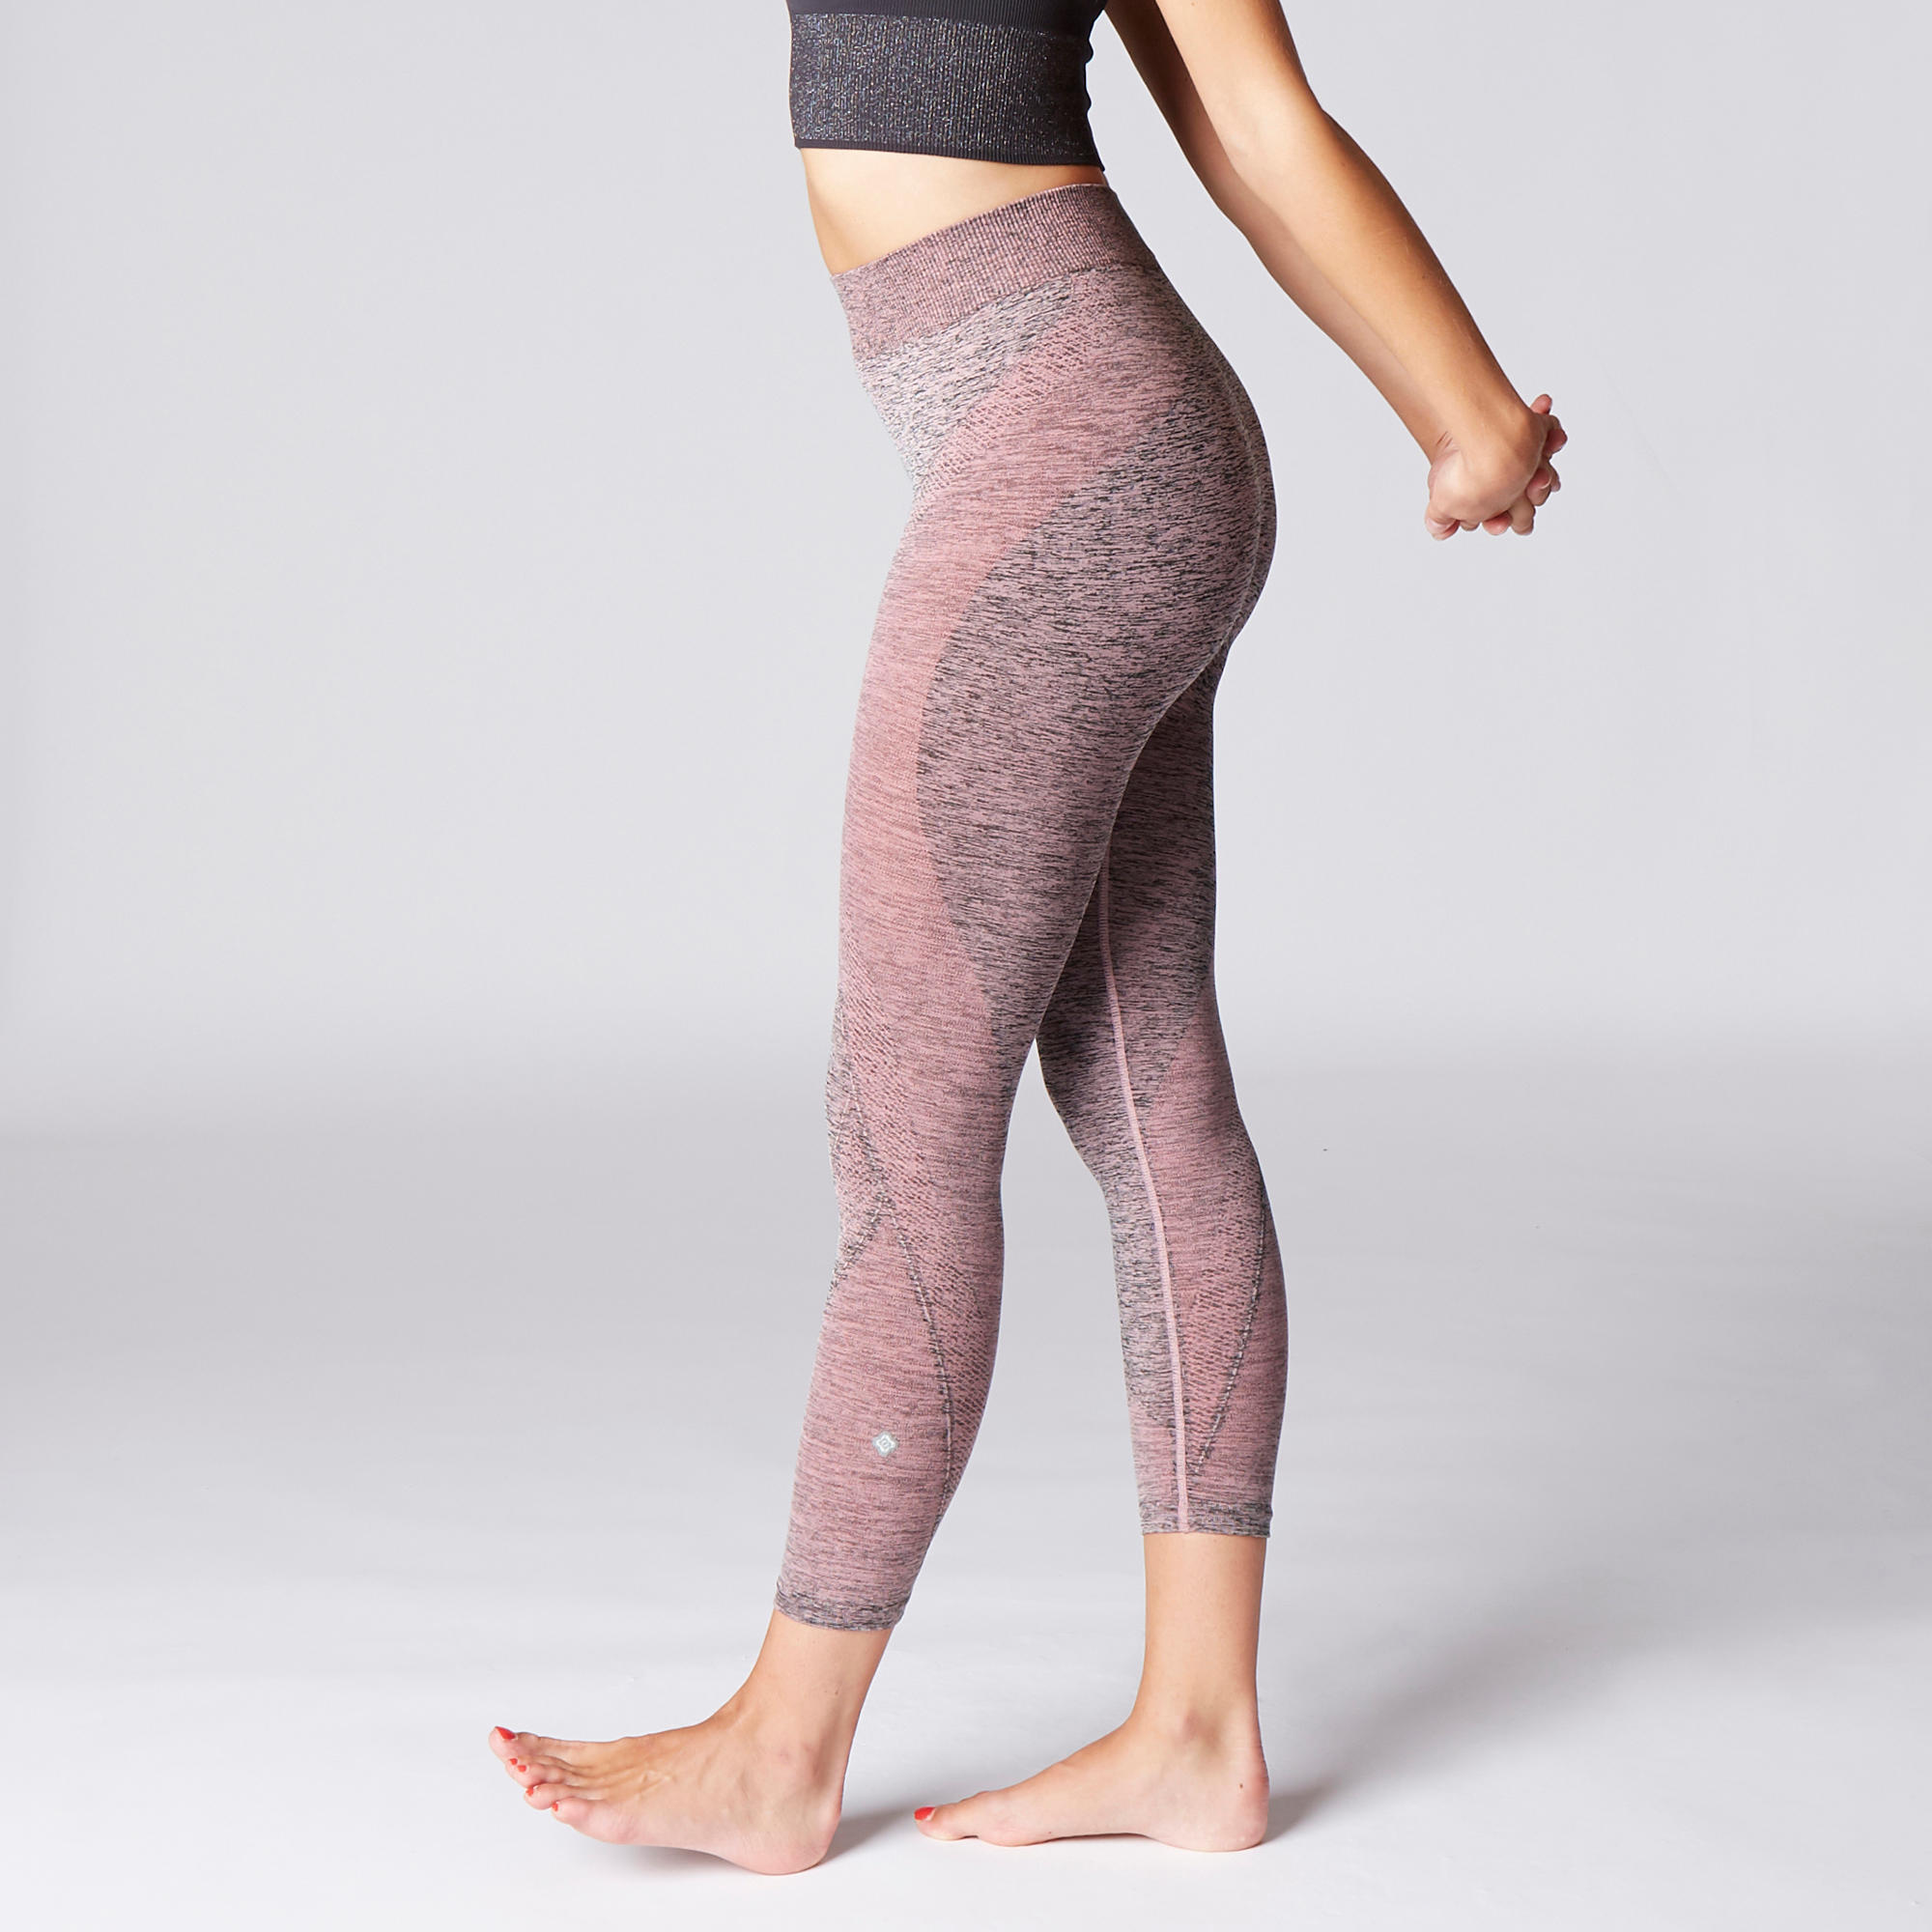 Decathlon - Kimjaly, Seamless 7/8 Yoga Leggings, Women's - Walmart.com